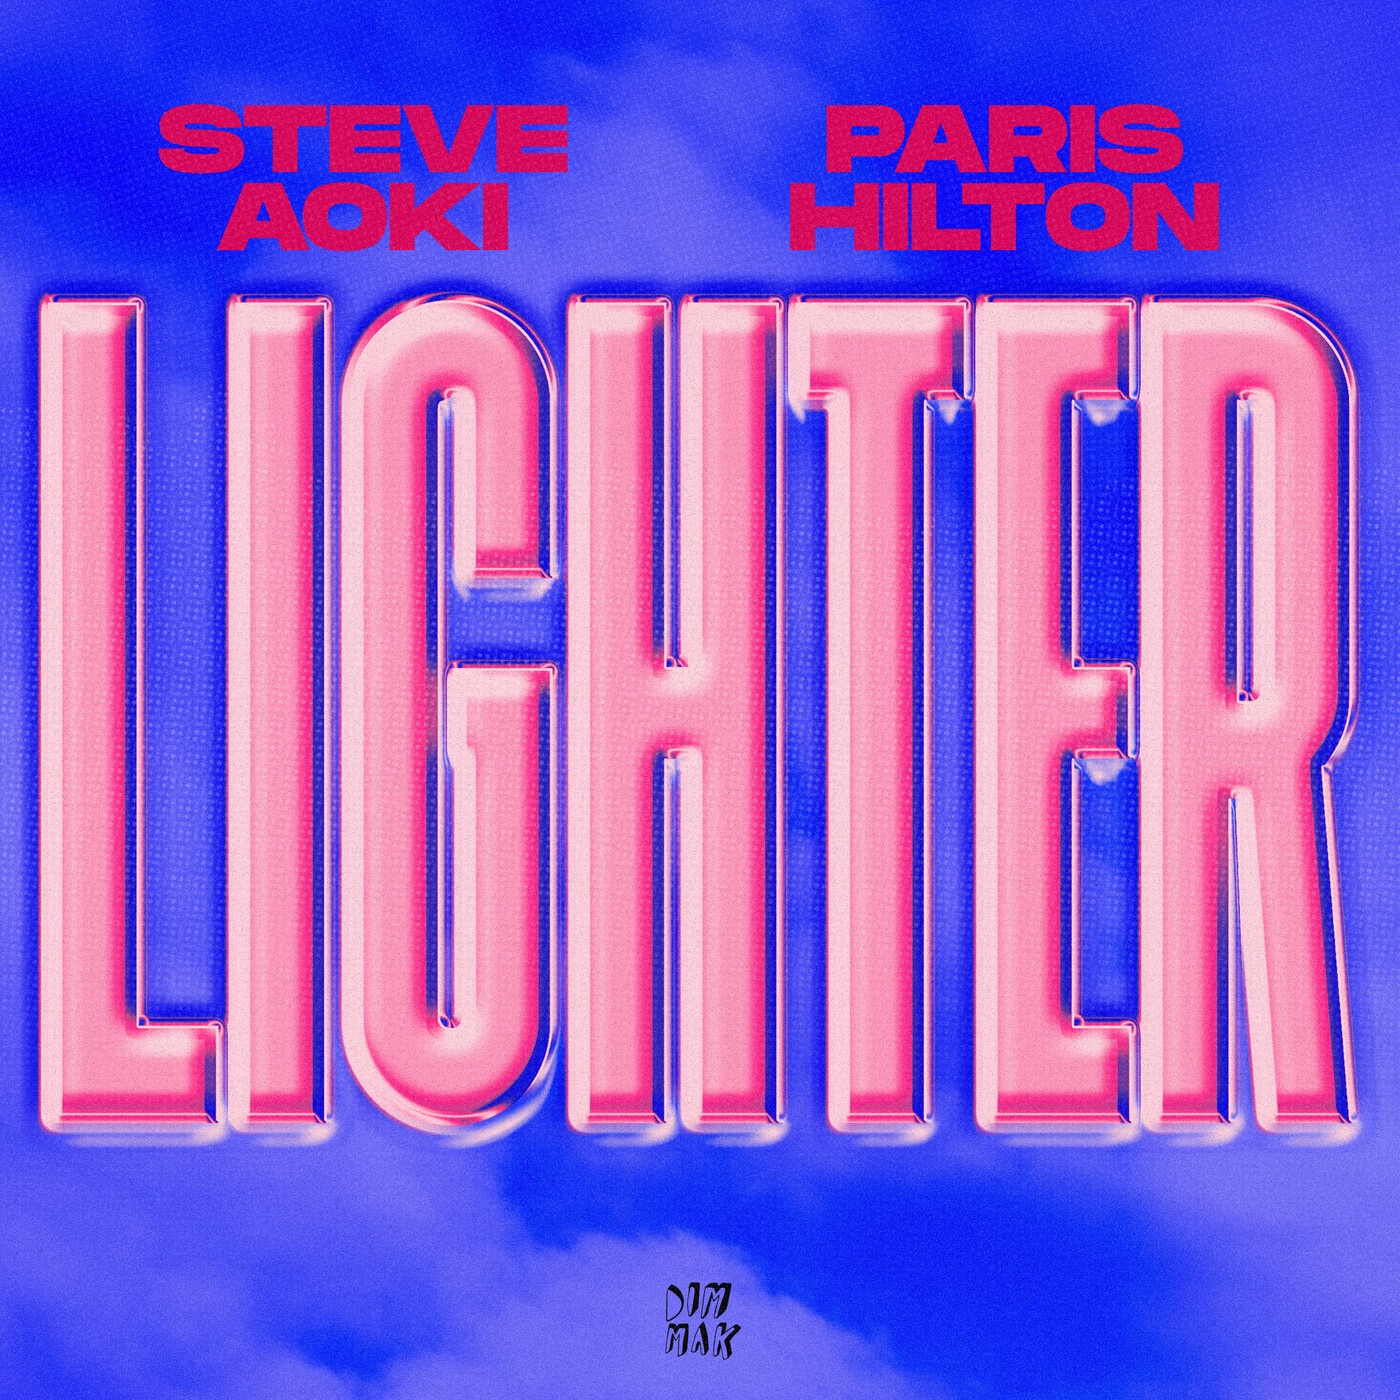 Steve Aoki & Paris Hilton Lighter cover artwork